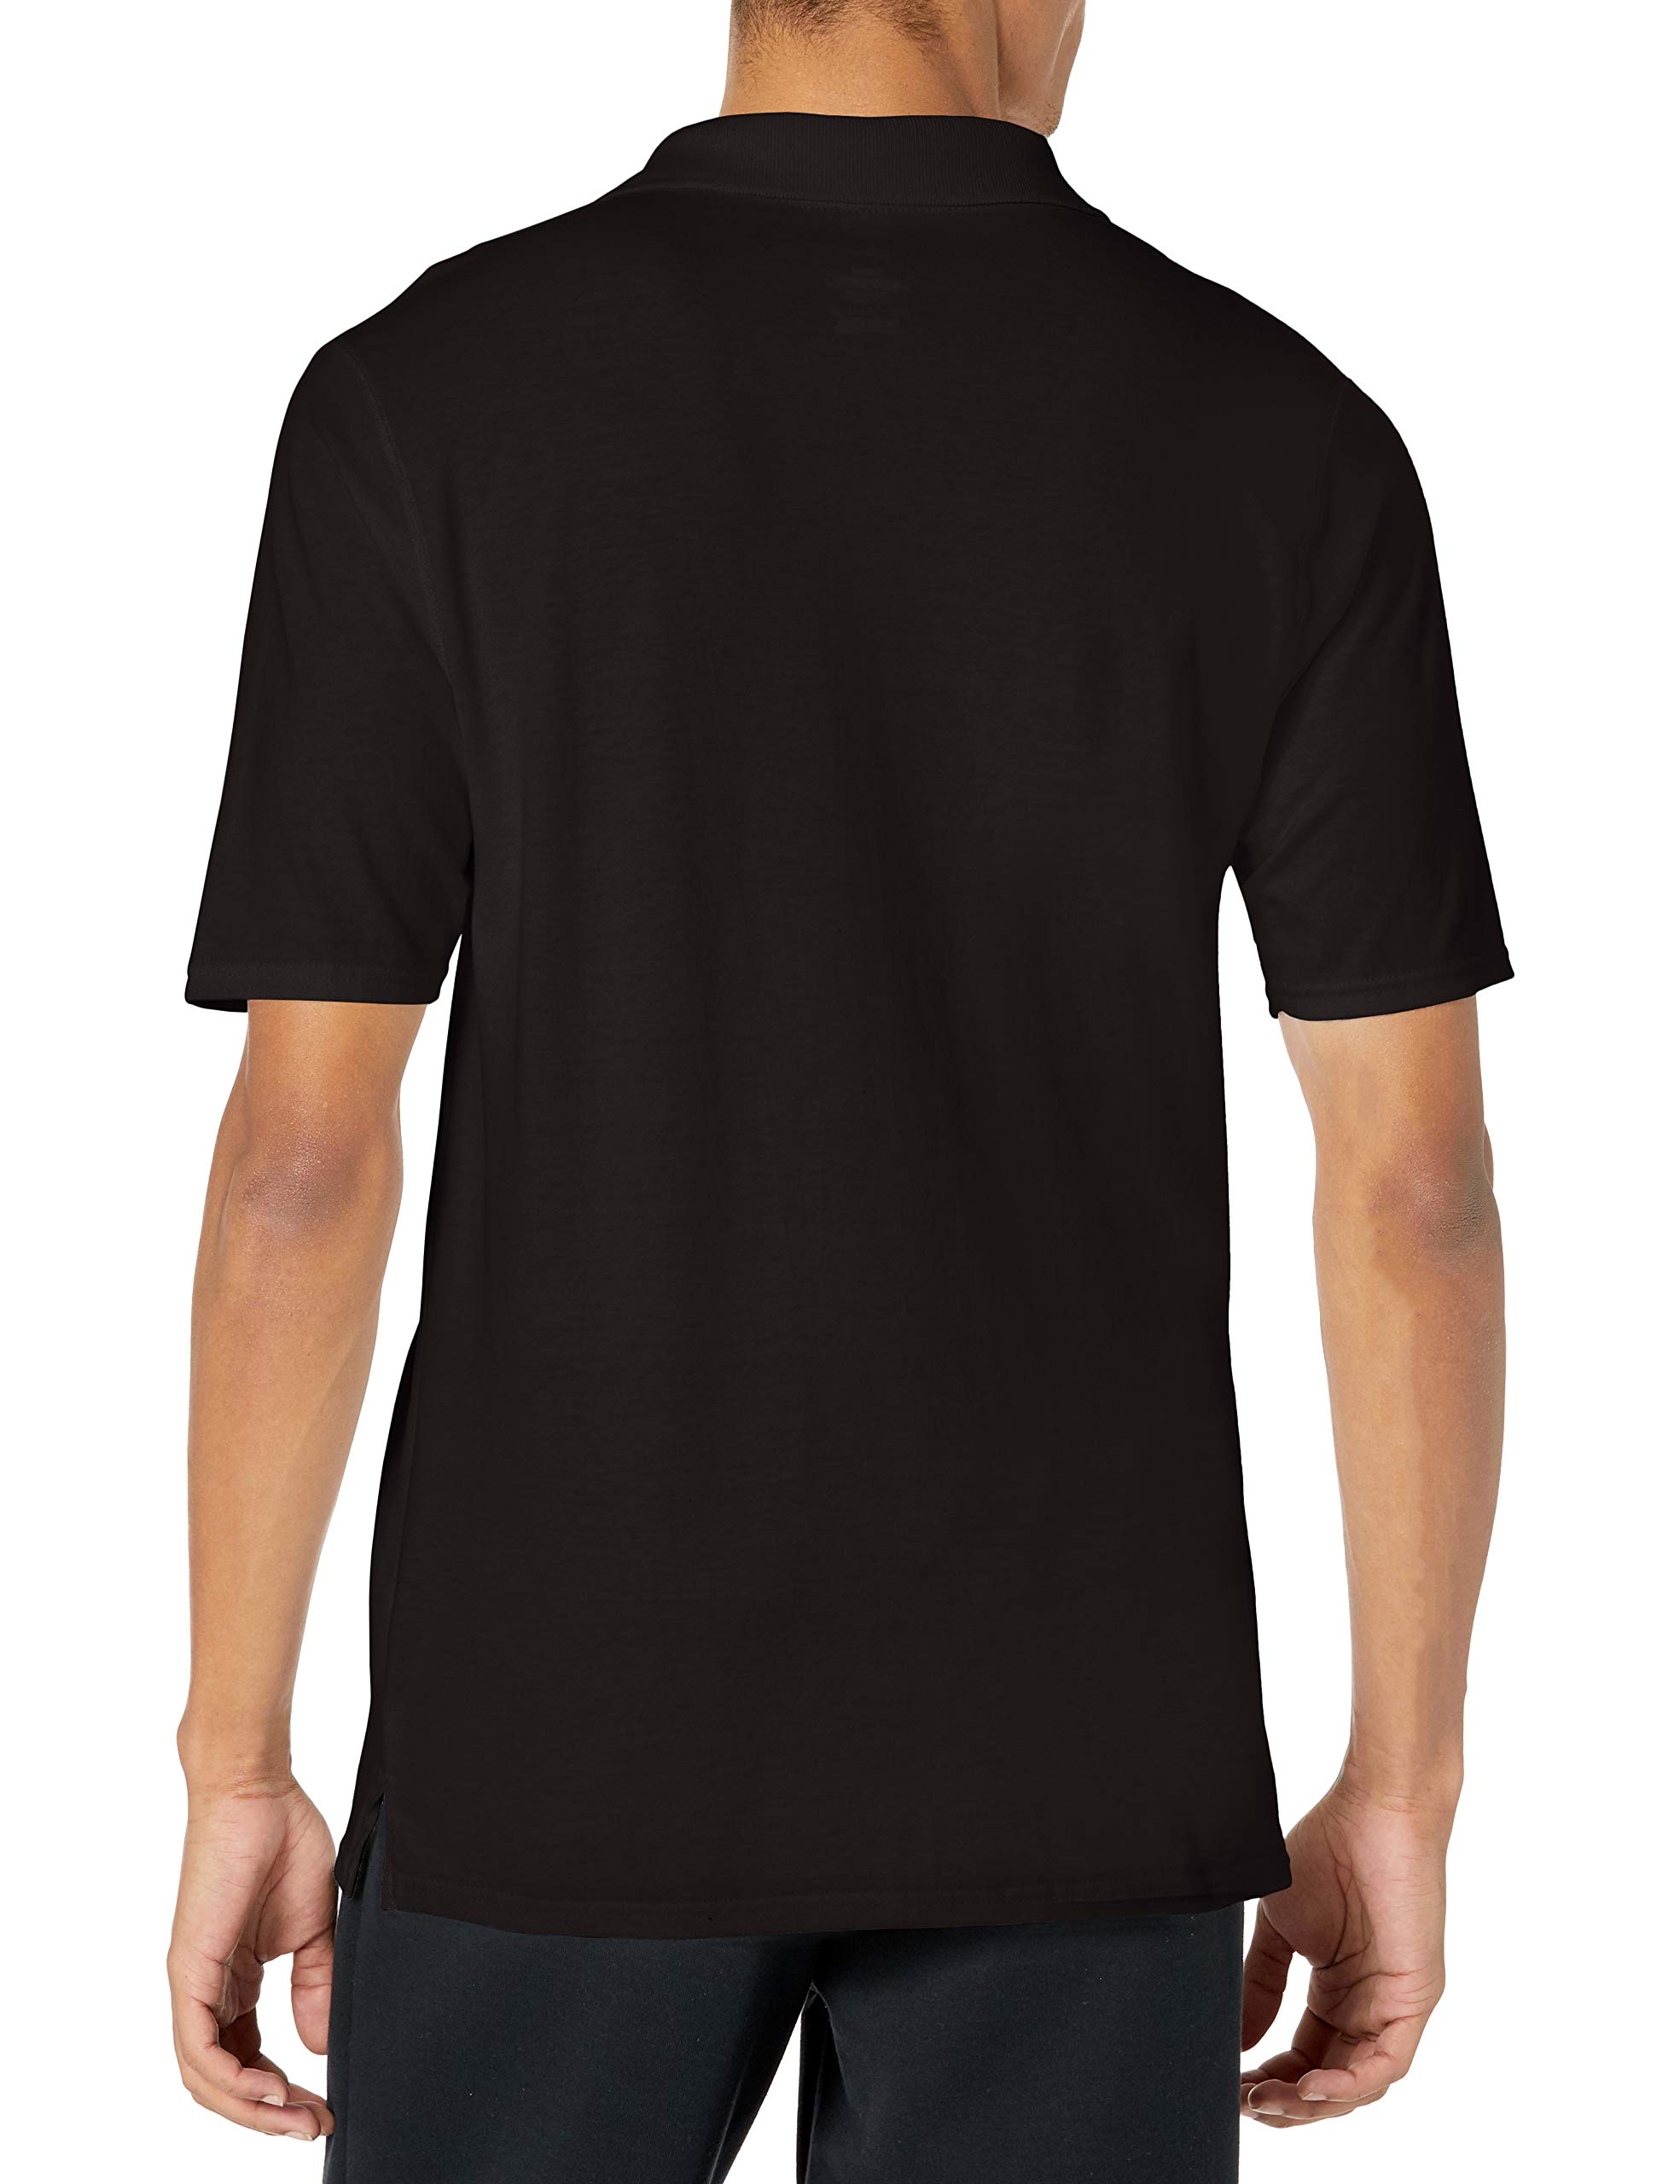 Hanes Men's FreshIQ Polo Shirt, Men’s X-Temp Polo Shirt, Moisture-Wicking Performance Polo Shirt